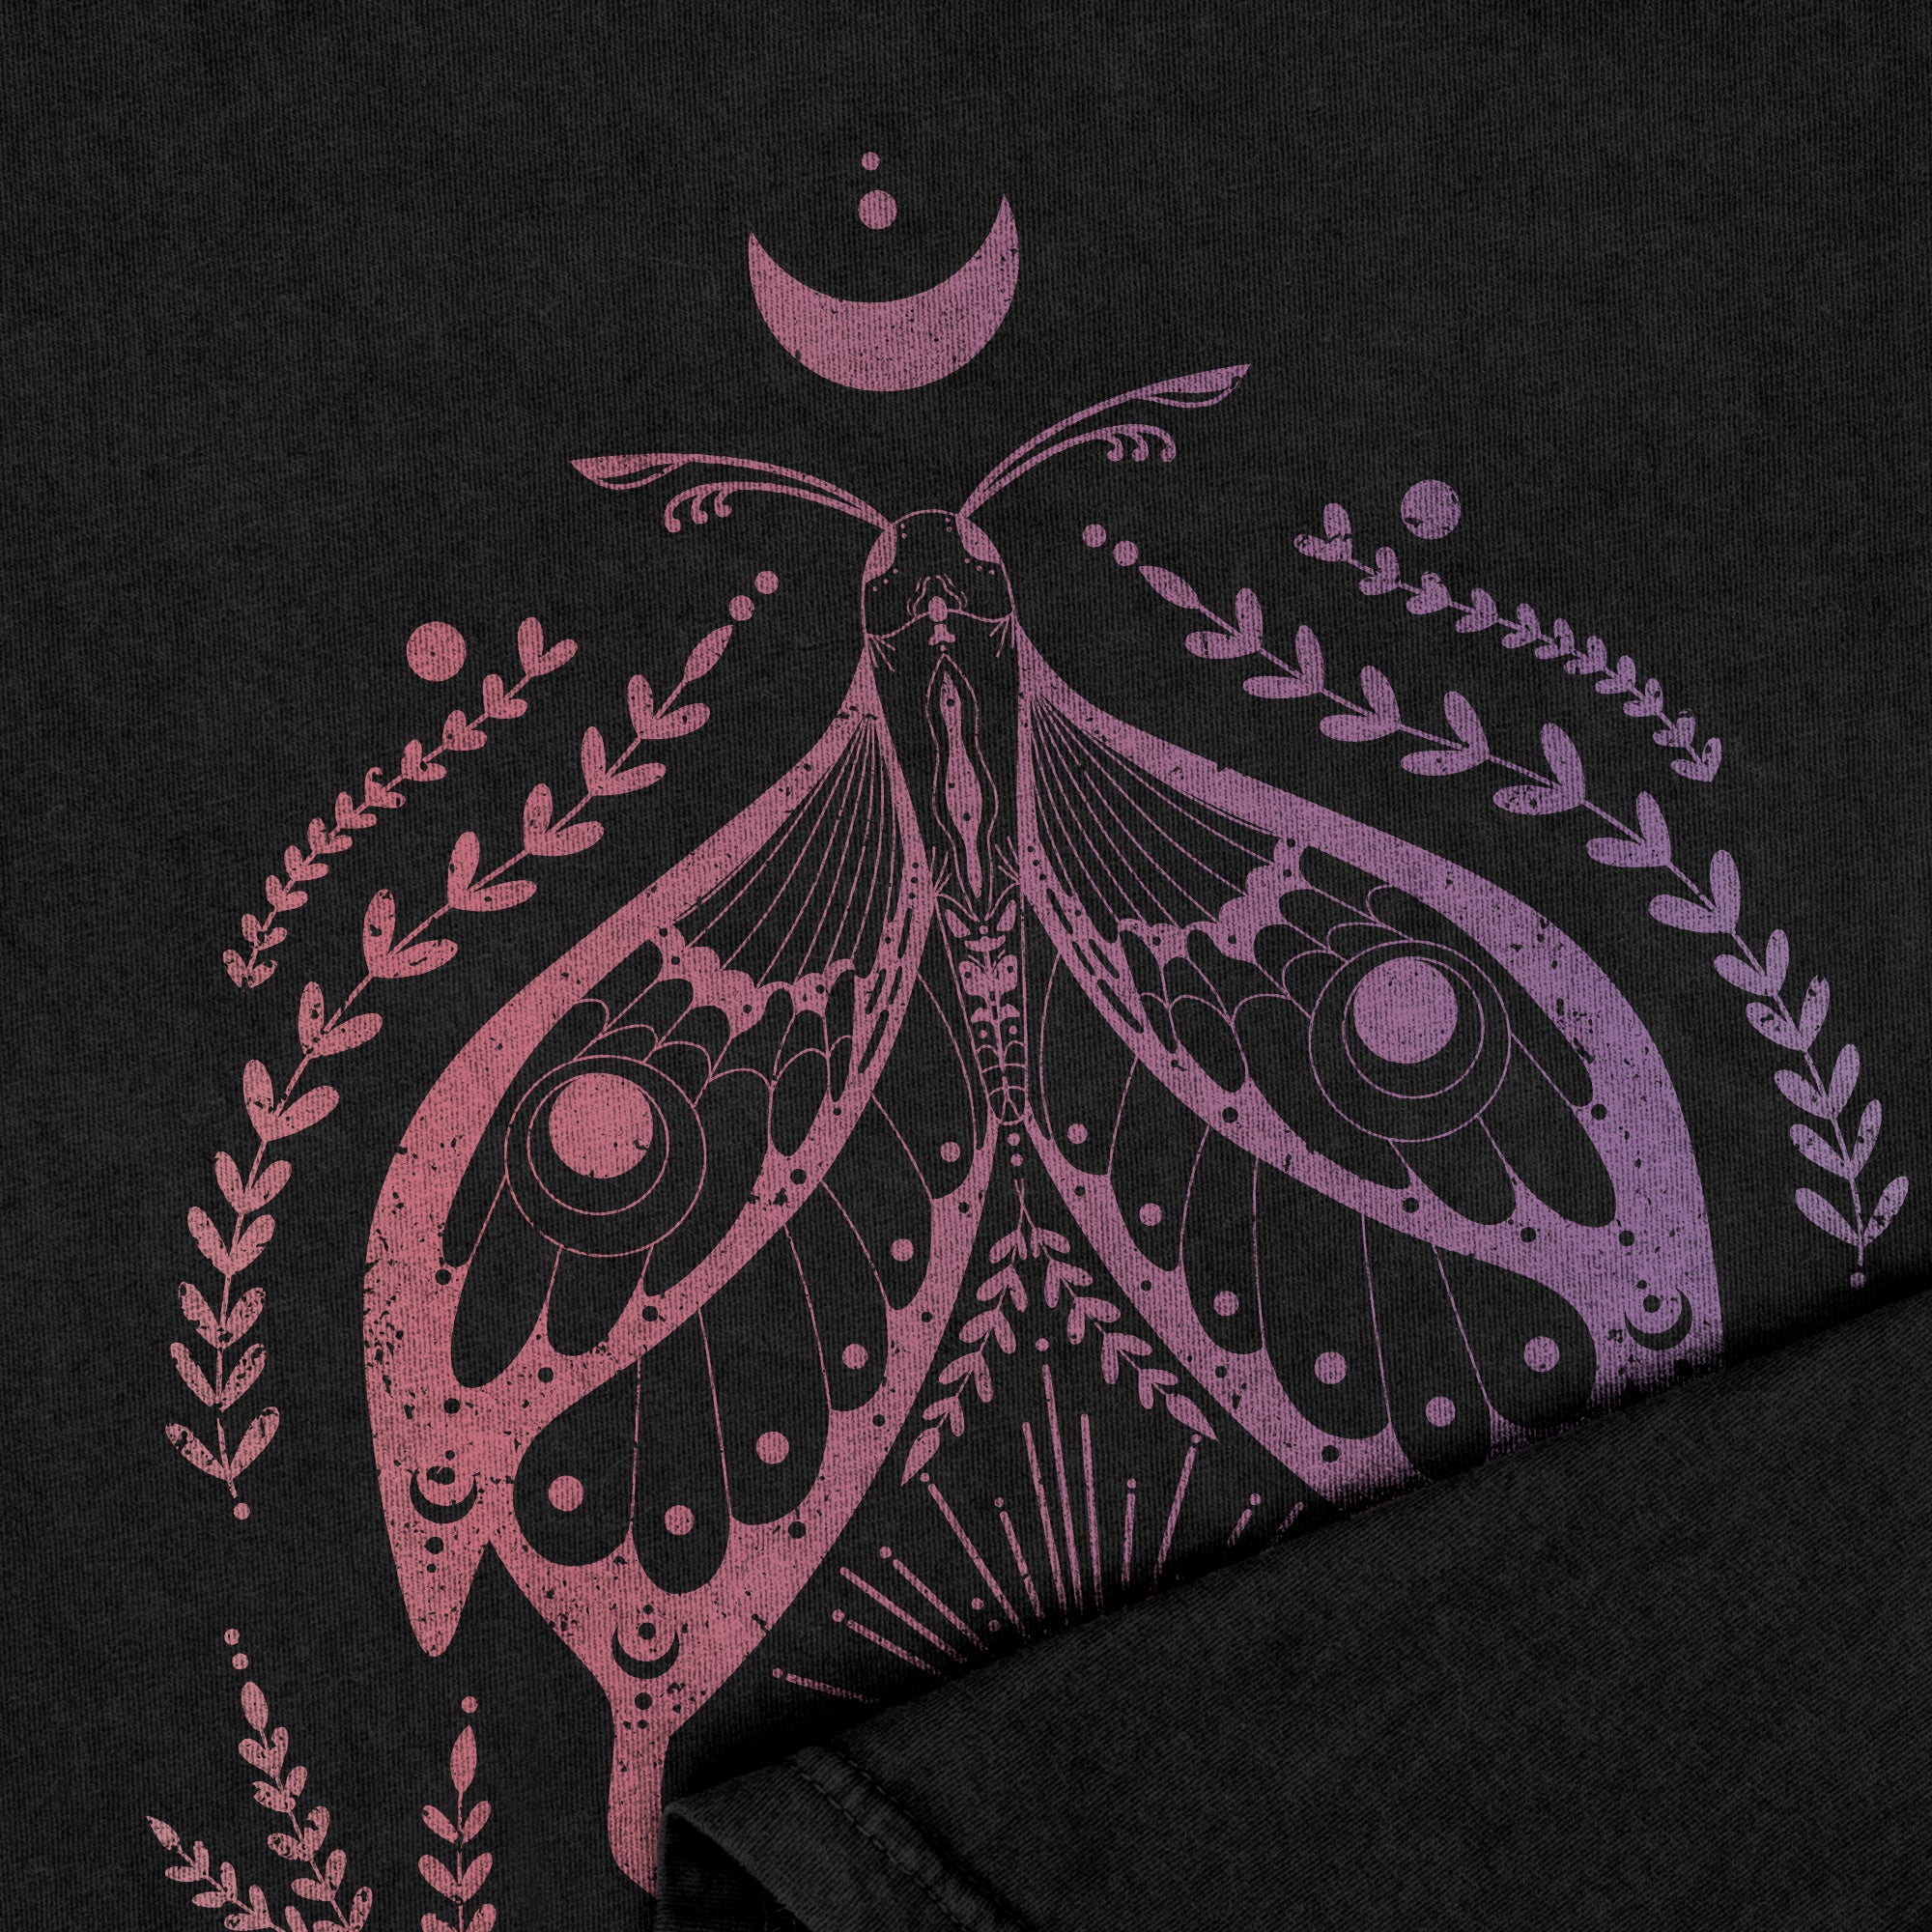 Gradient Boho Butterflies Oversized Shirt for Women Garment-Dyed Graphic Tee